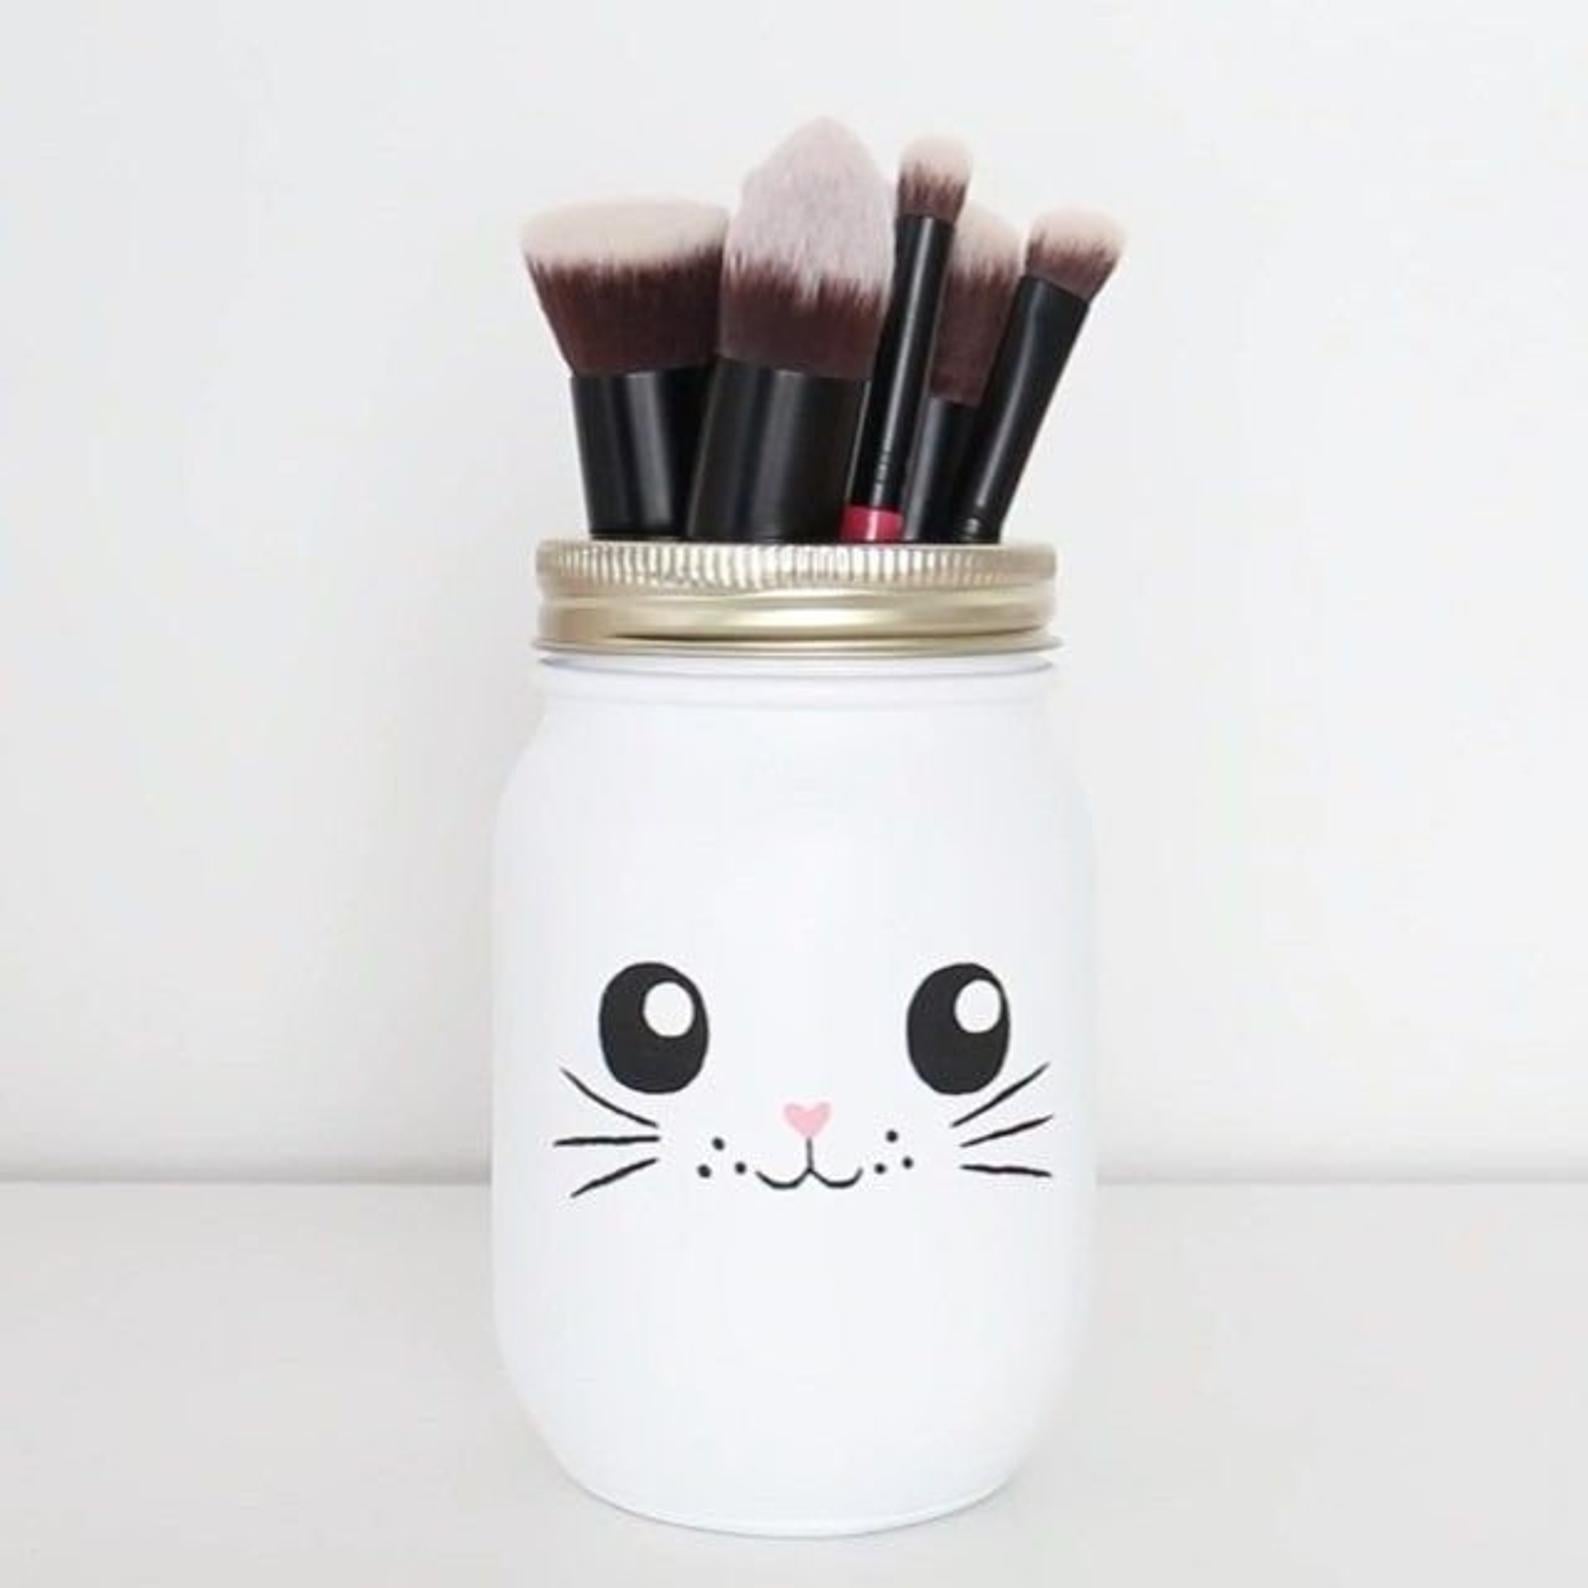 Aesthetic Honey Pot Shaped Ceramic Makeup Brush Holder – Katze Home